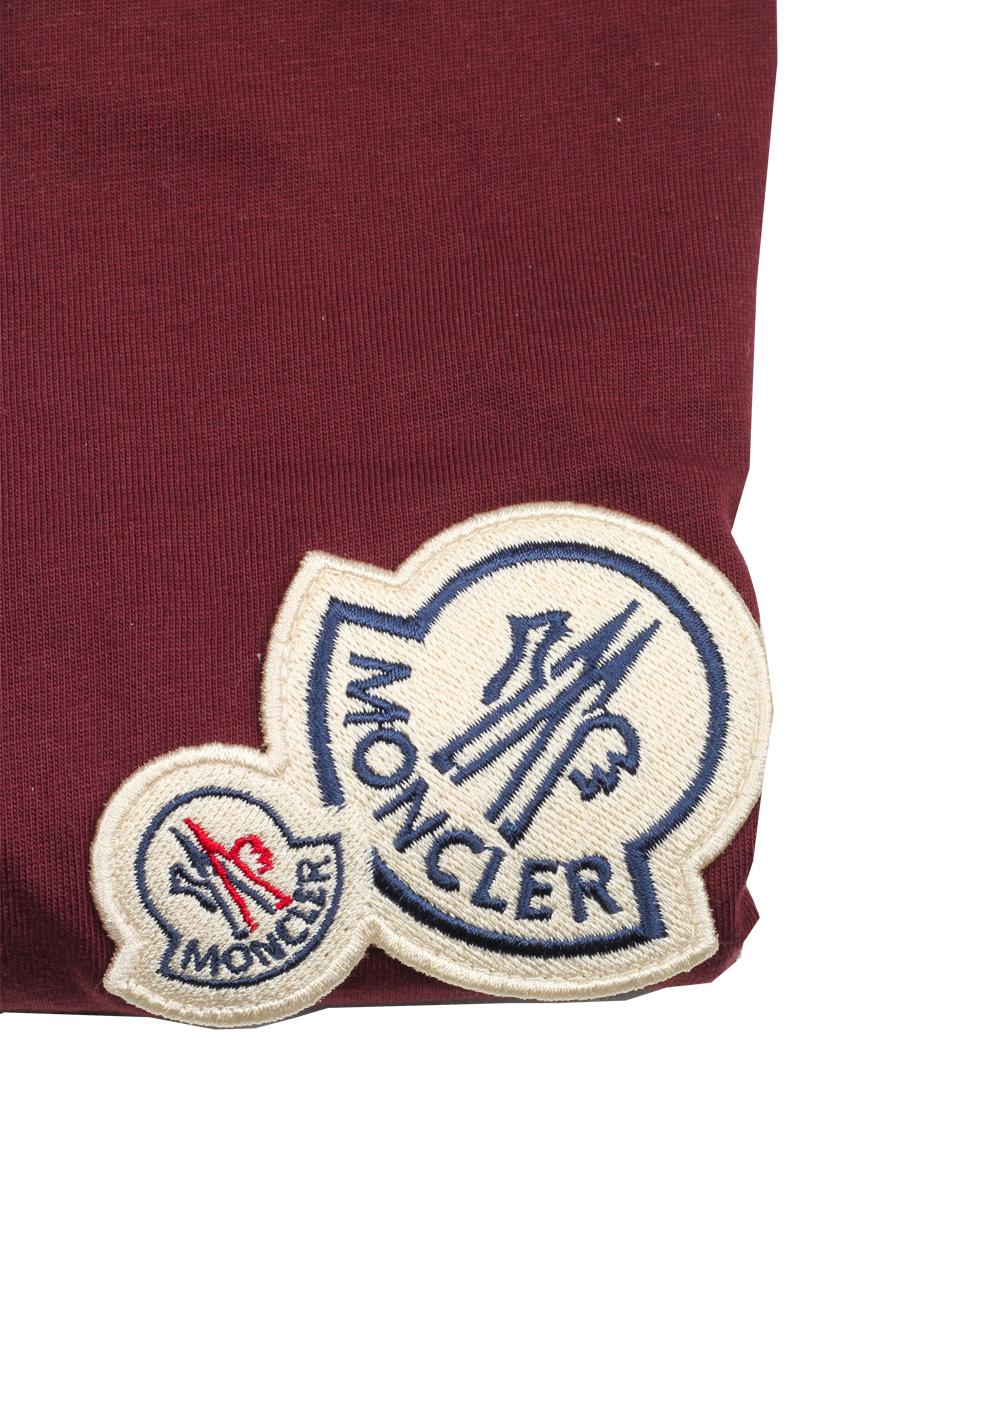 Moncler Red Brand Patch Crew Neck Tee Shirt Size L / 40R U.S. | Costume Limité